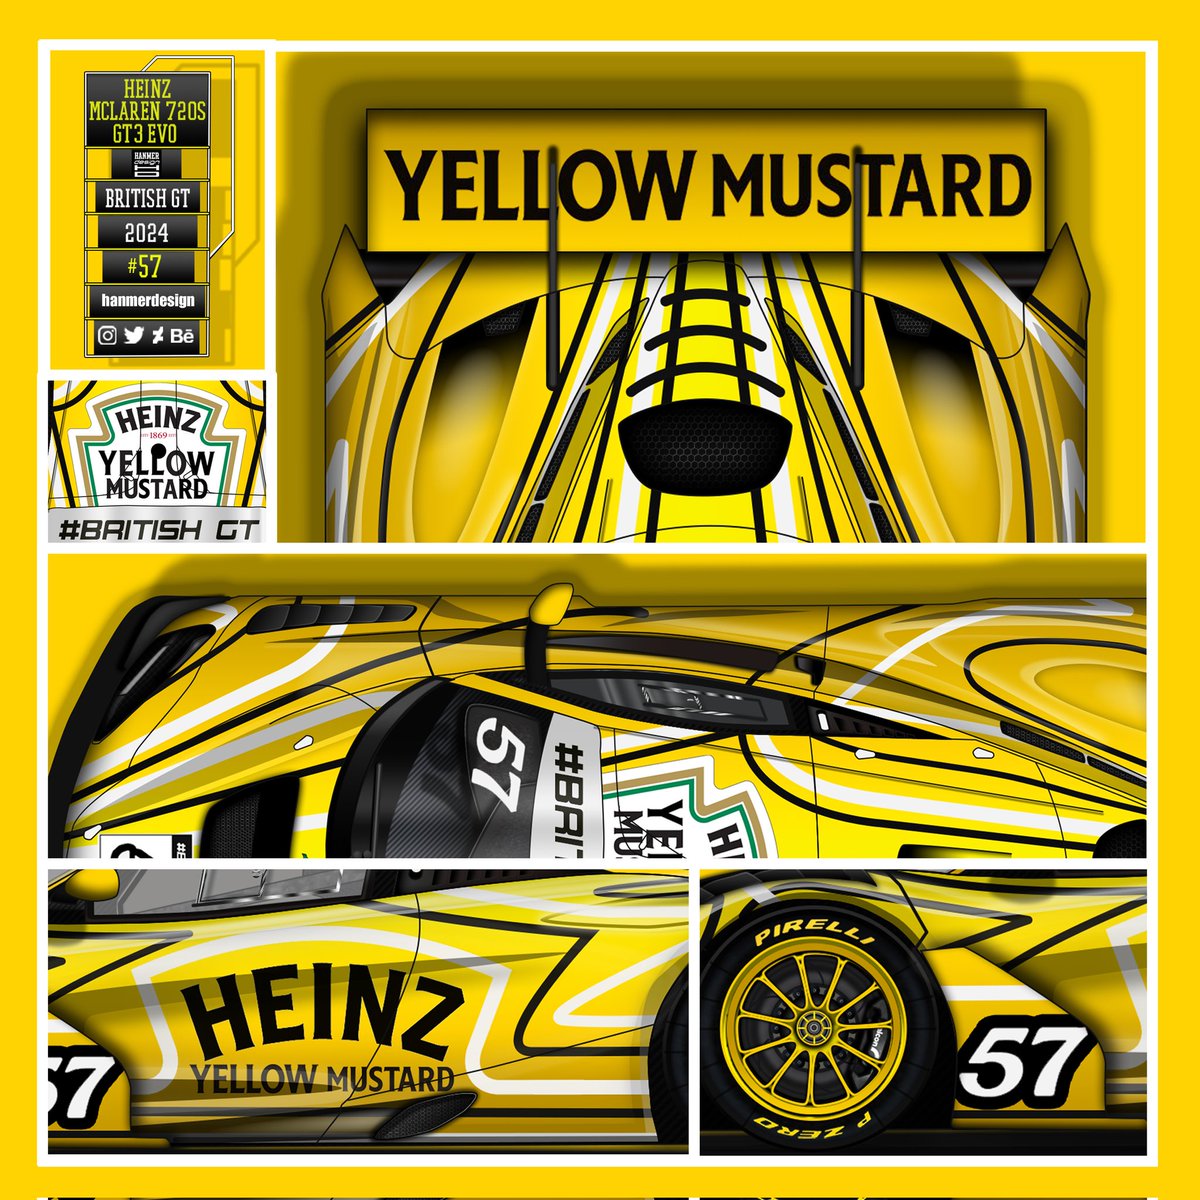 Heinz Yellow Mustard McLaren 720s GT3 Evo.

#wec #mclaren #mclaren720s #lmgt3 #gt3 #britishgt #heinz #heinzyellowmustard #yellowmustard #pirelli #sonax #liverydesign #graphicdesign #vehiclewraps #livery #liveries